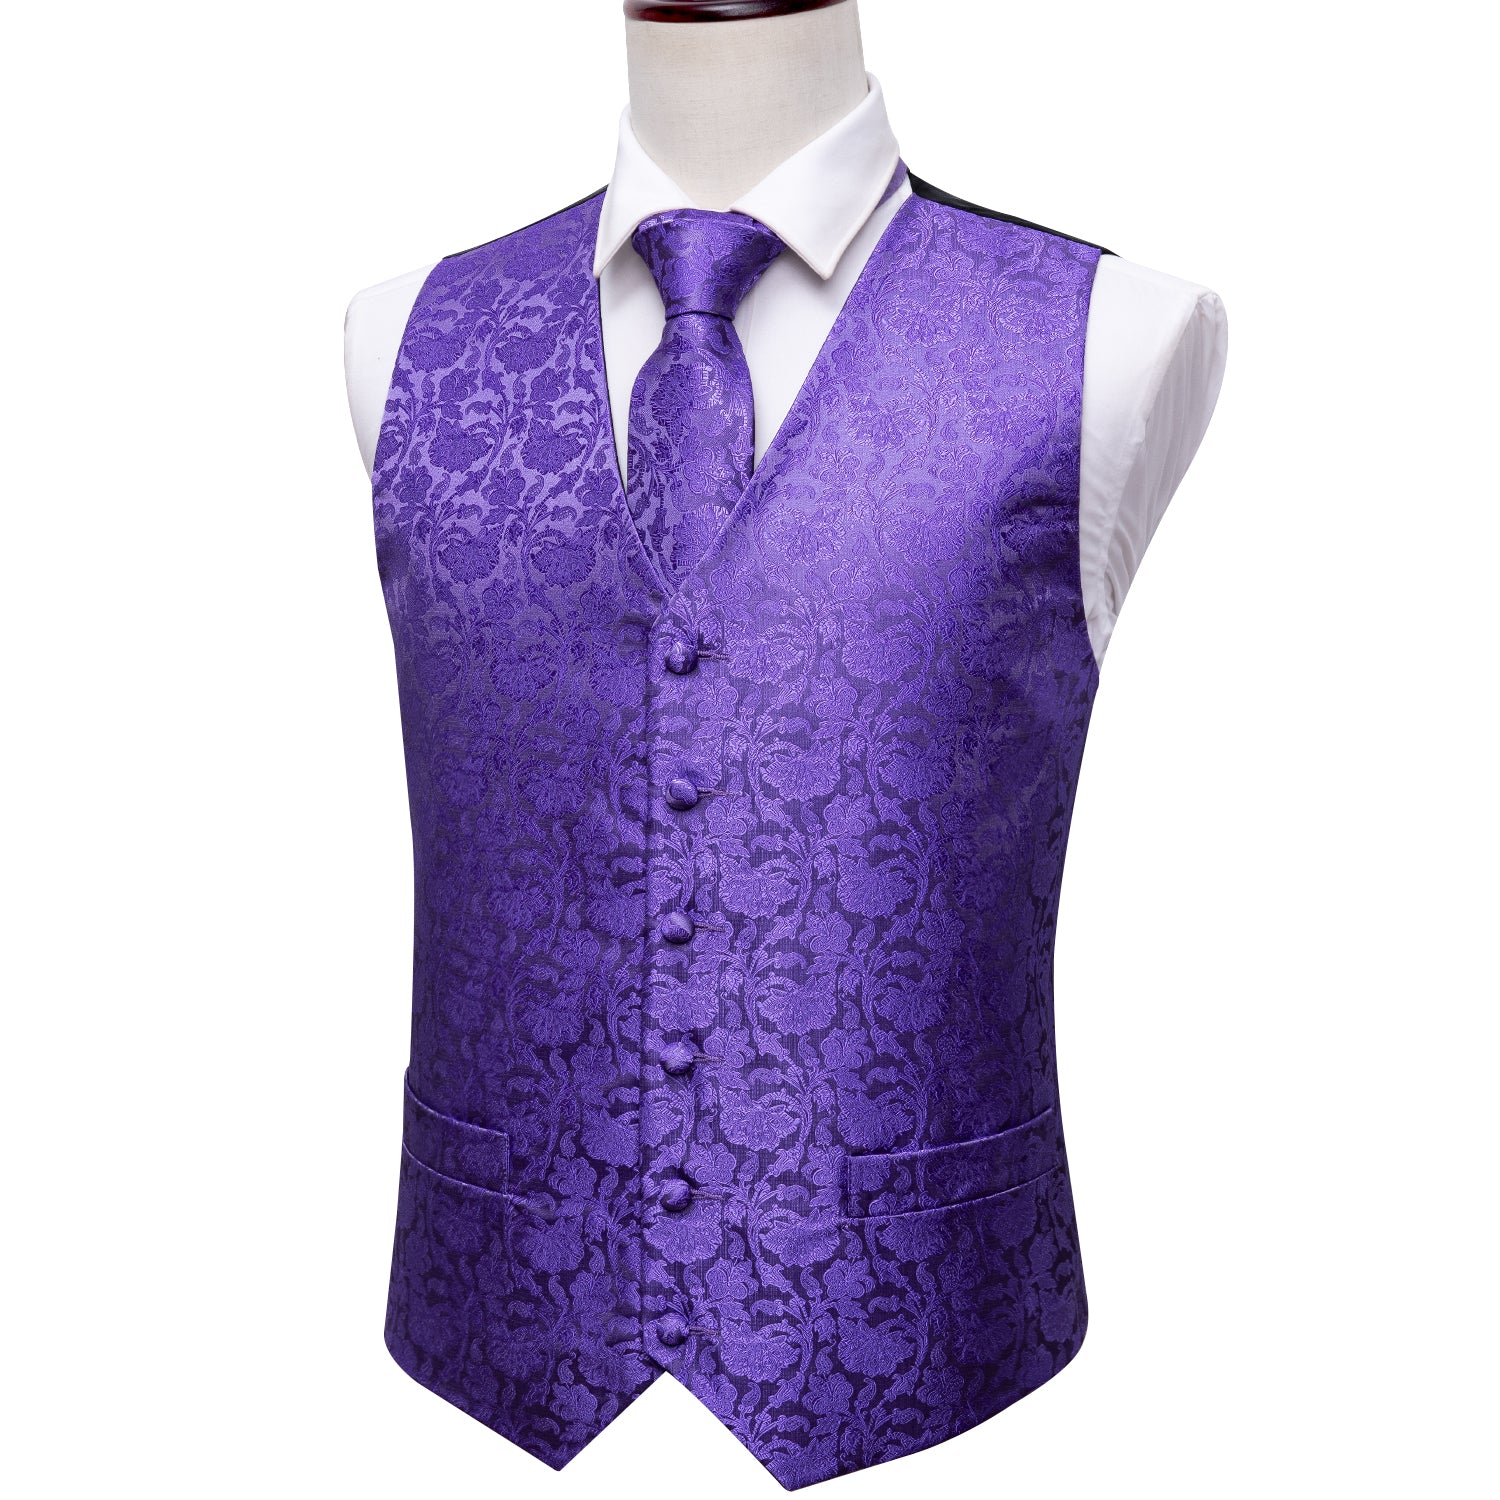 purple vest and bow tie